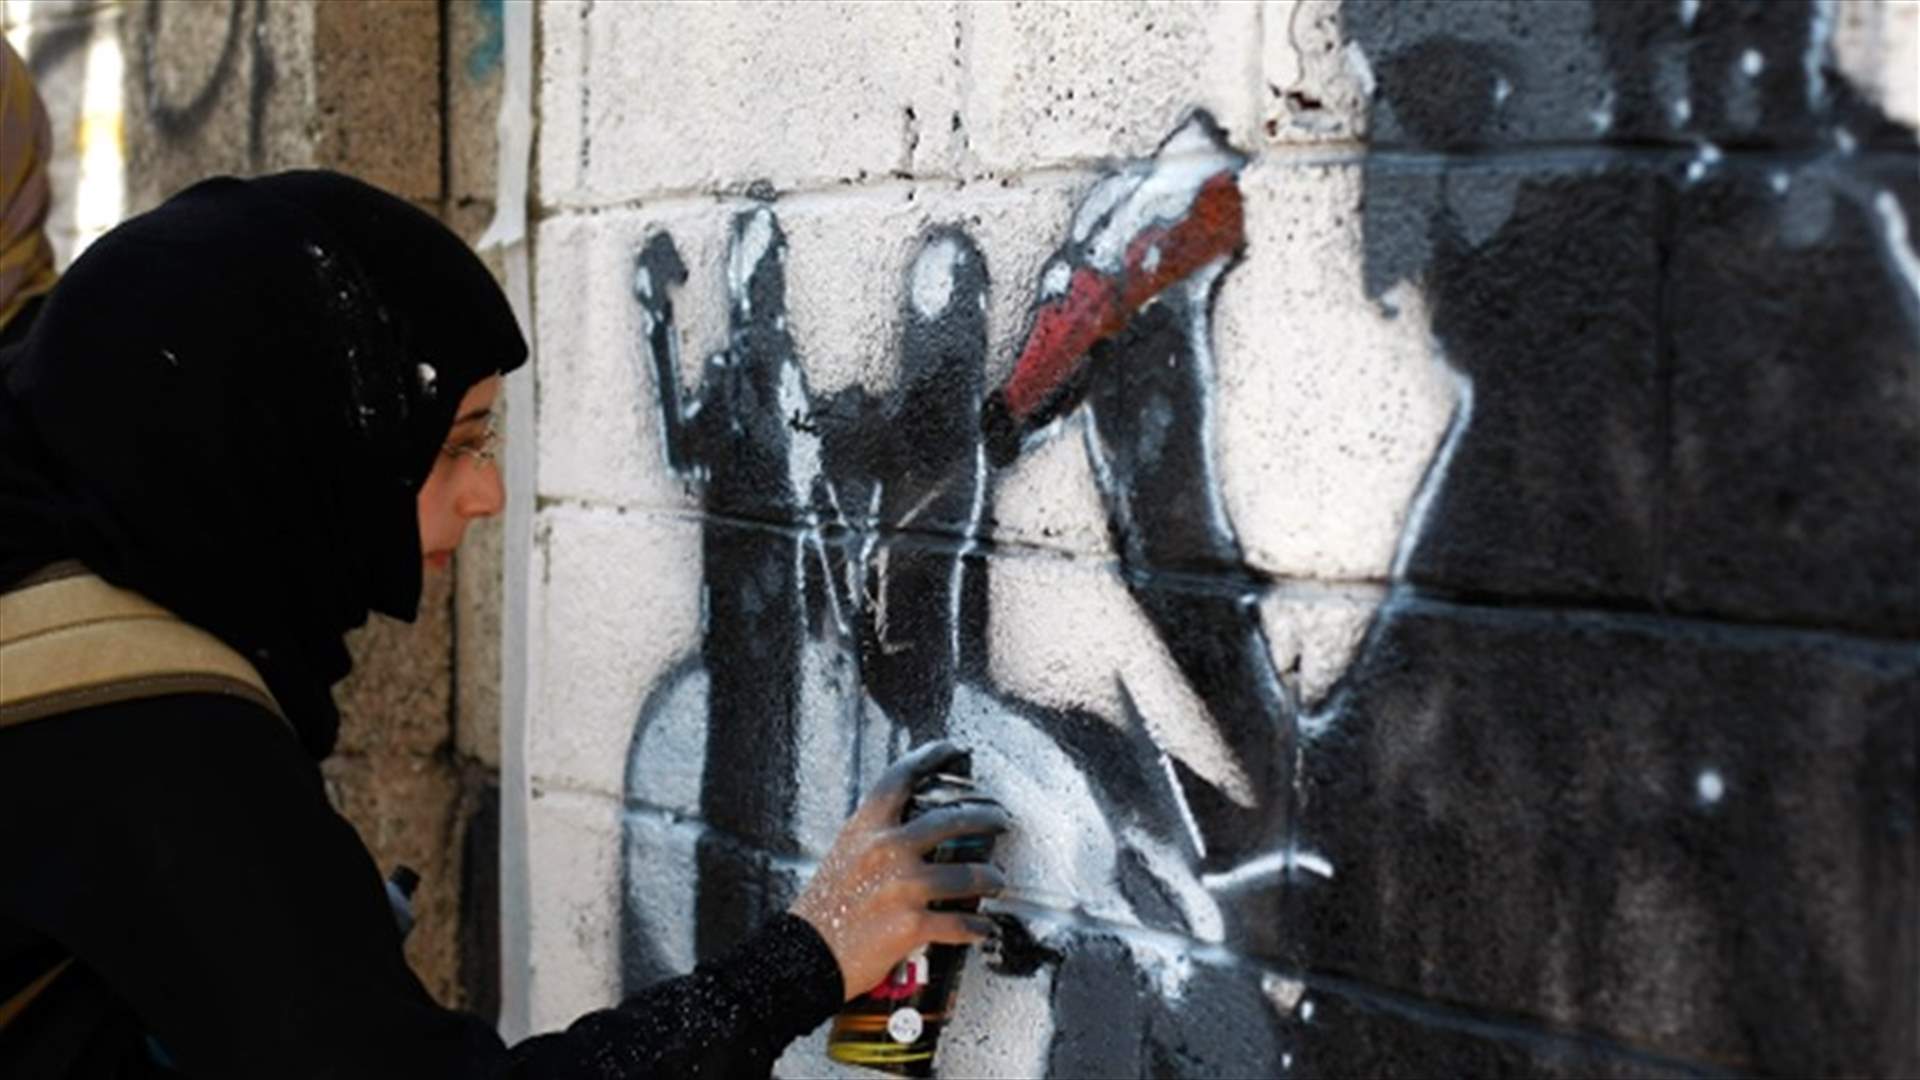 Yemeni graffiti artists hope images will highlight war horrors